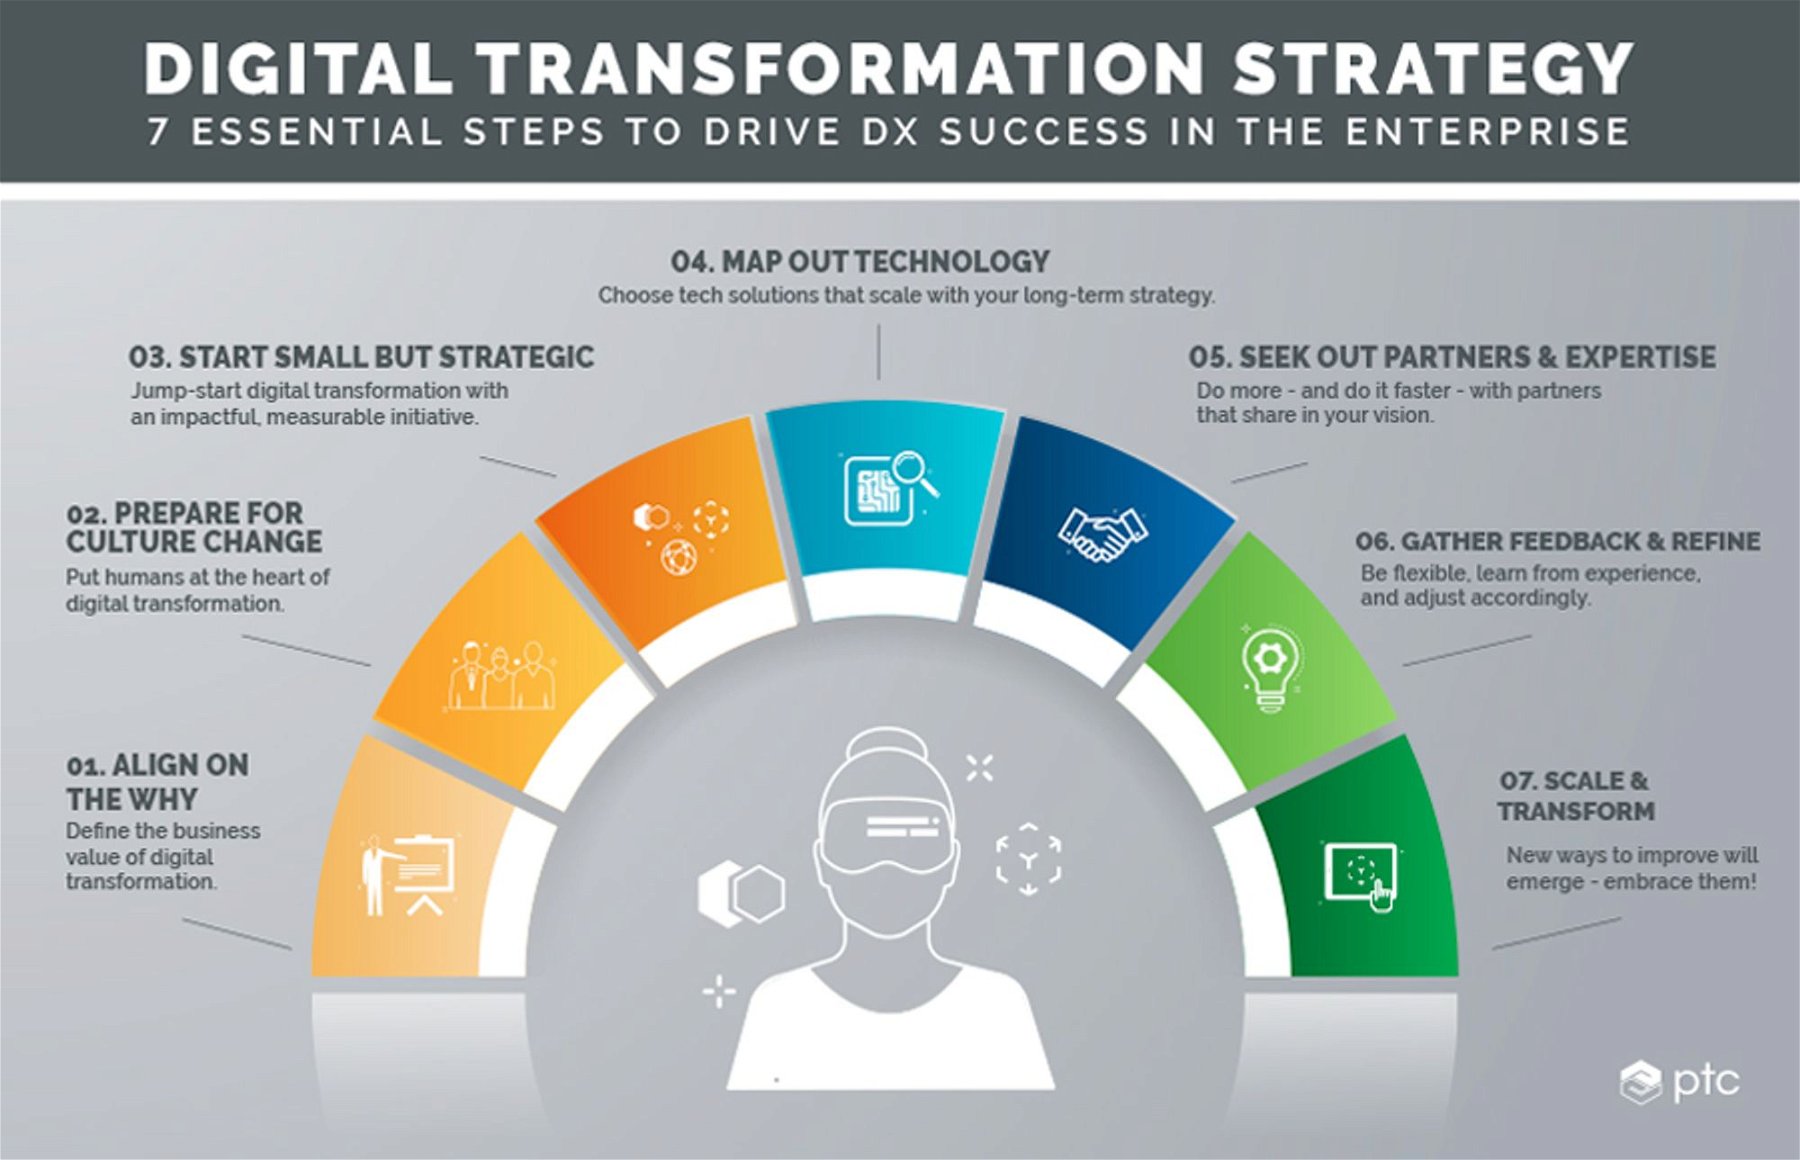 Digital Transformation Strategy | Source: PTC.com